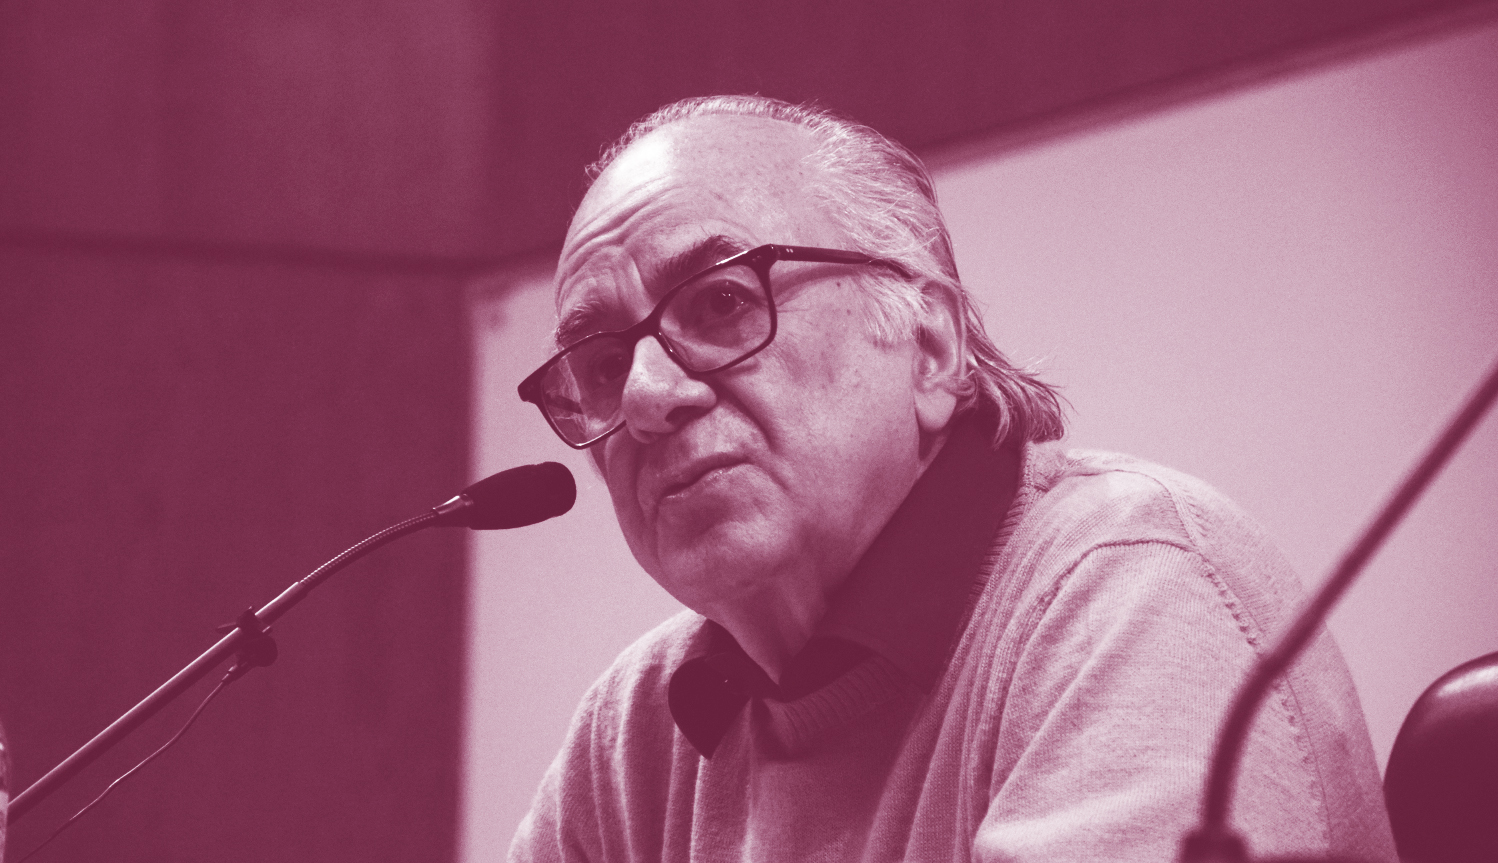 Palestra Anual Paulo Freire pelo Professor Boaventura de Sousa Santos